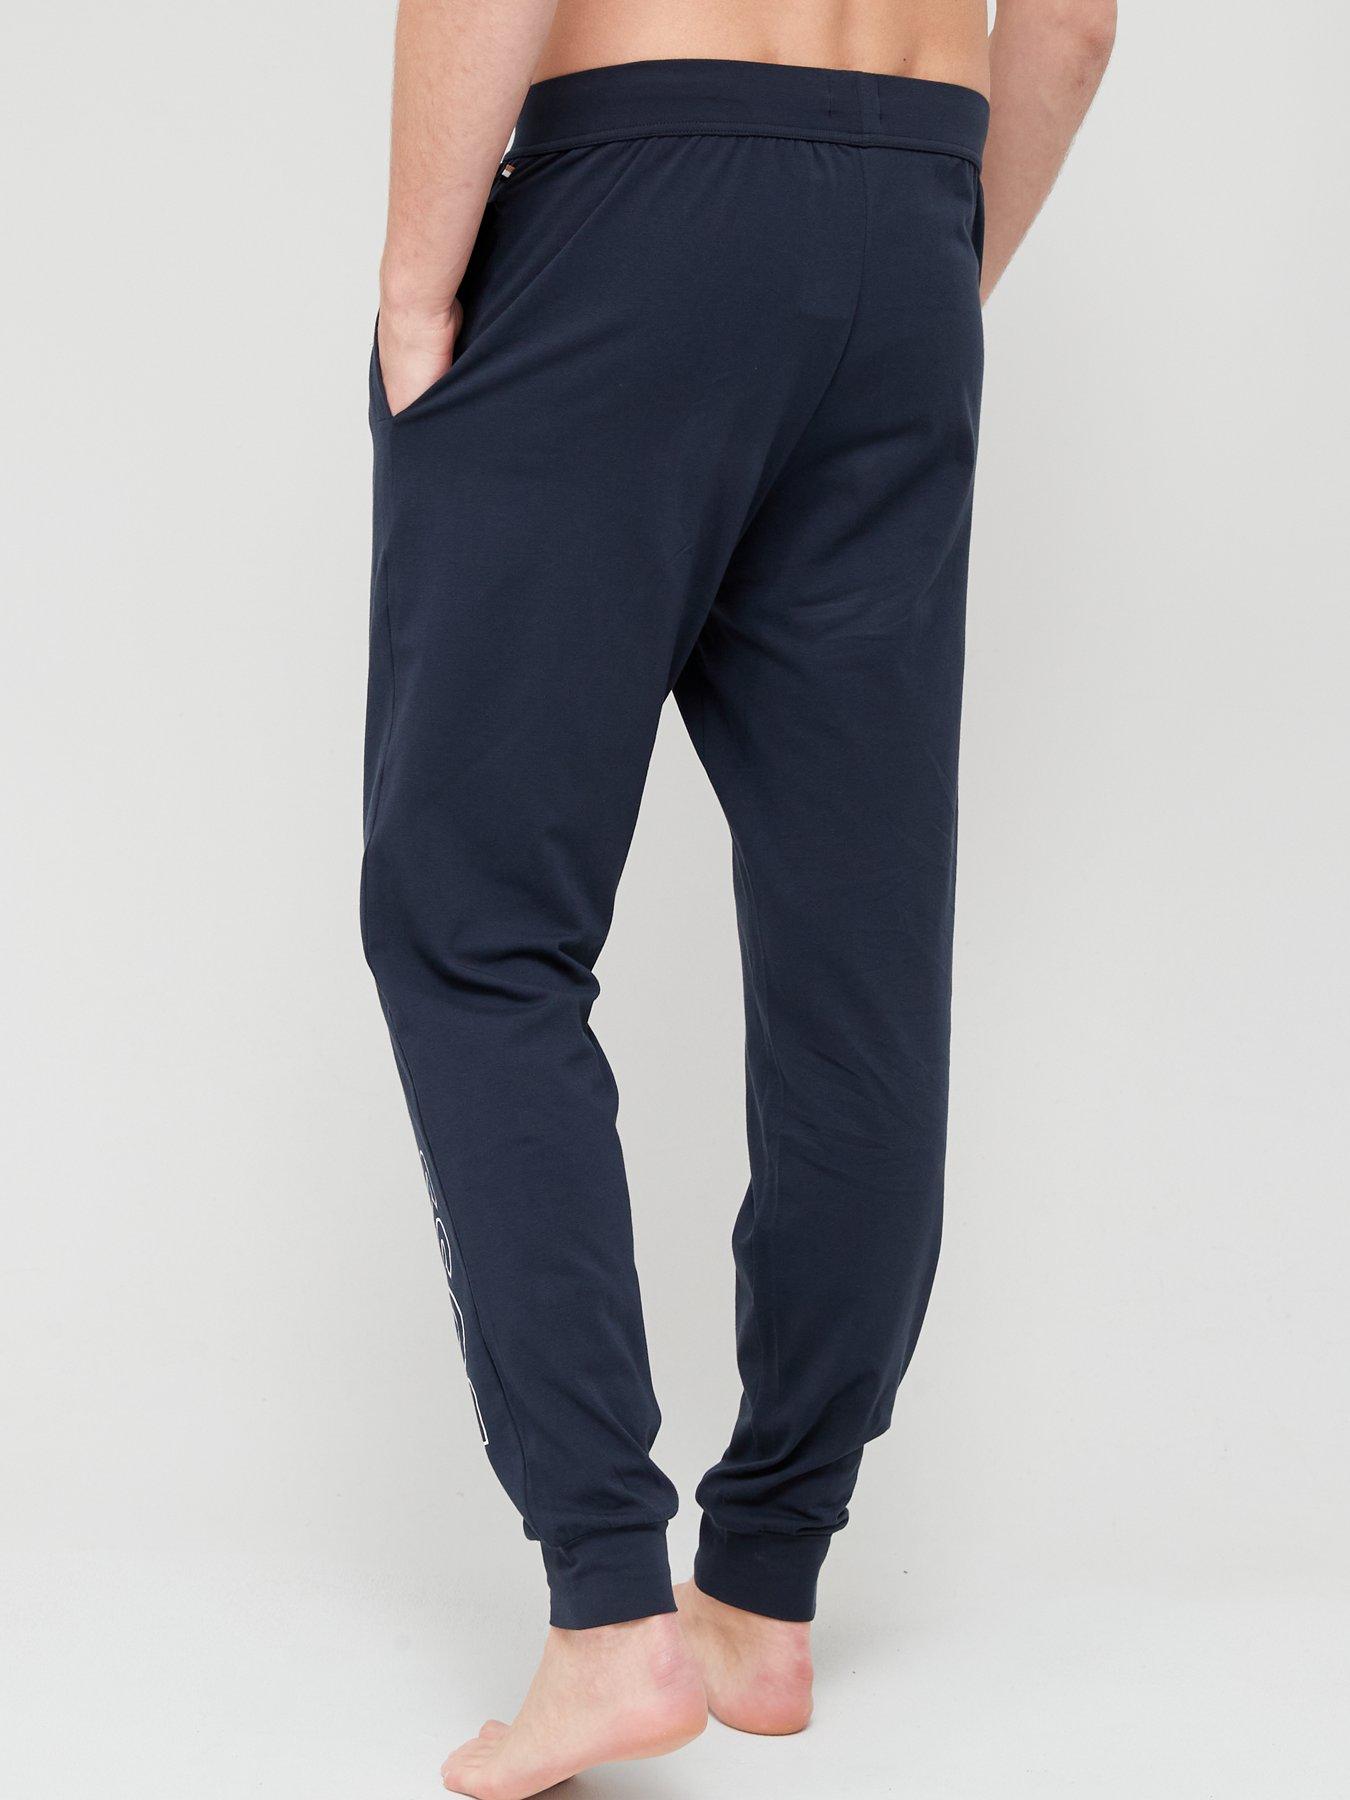  Bodywear Identity Lounge Pants - Navy